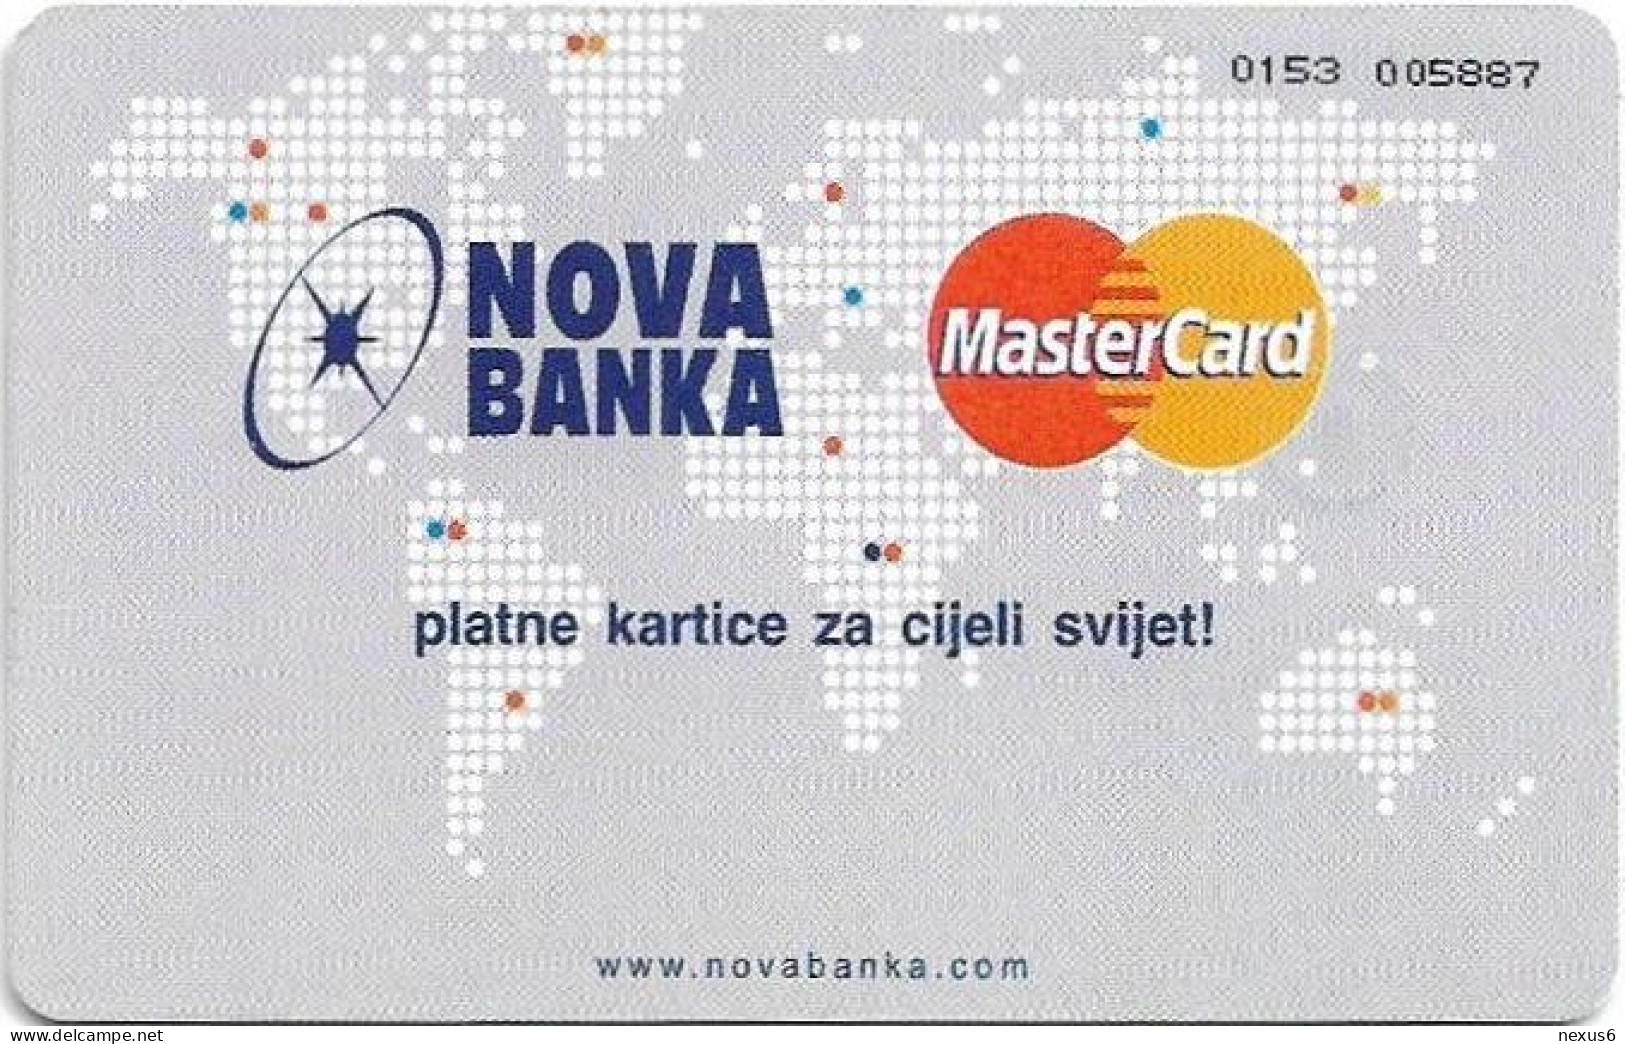 Bosnia - Republika Srpska - Nova Banka - Mastercard 1, Gem5 Red, 01.2005, 150Units, Used - Bosnie